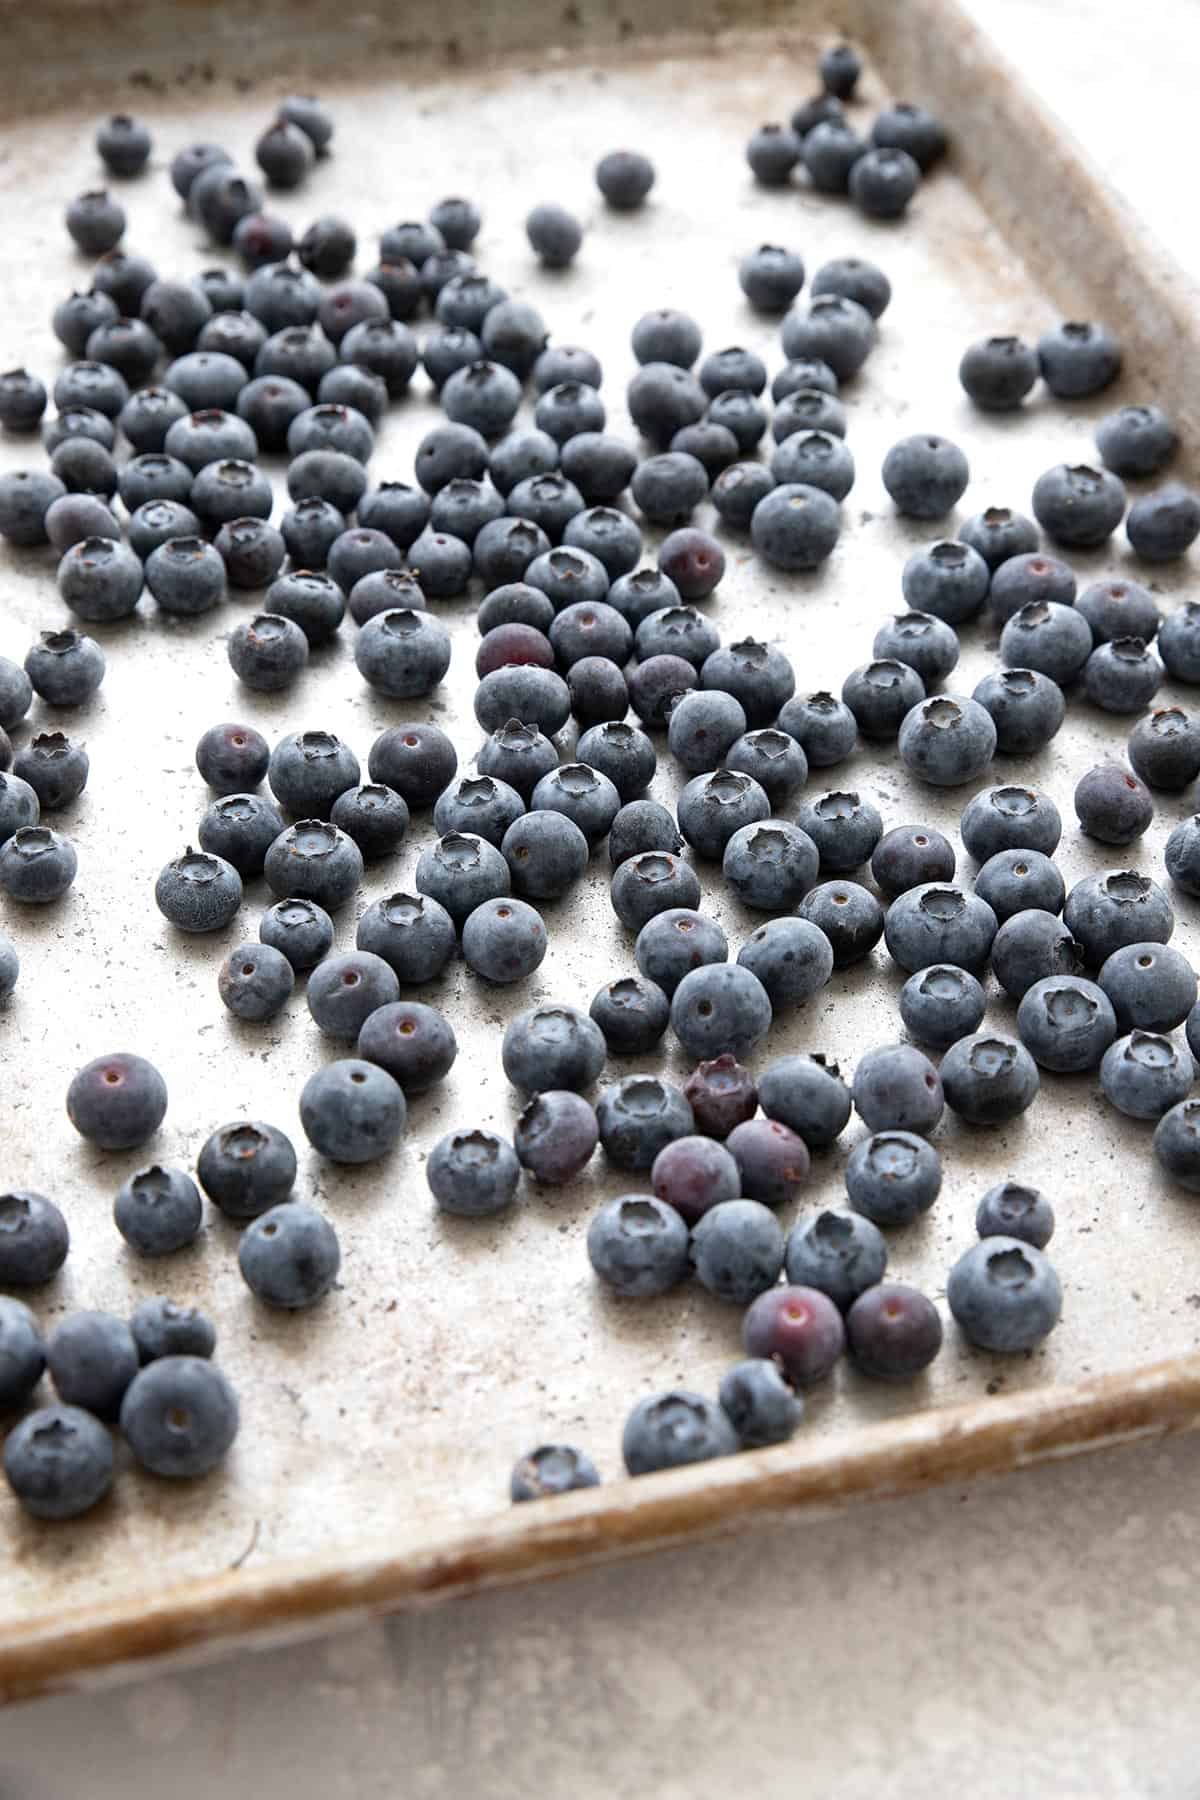 Frozen blueberries on a cookie sheet.